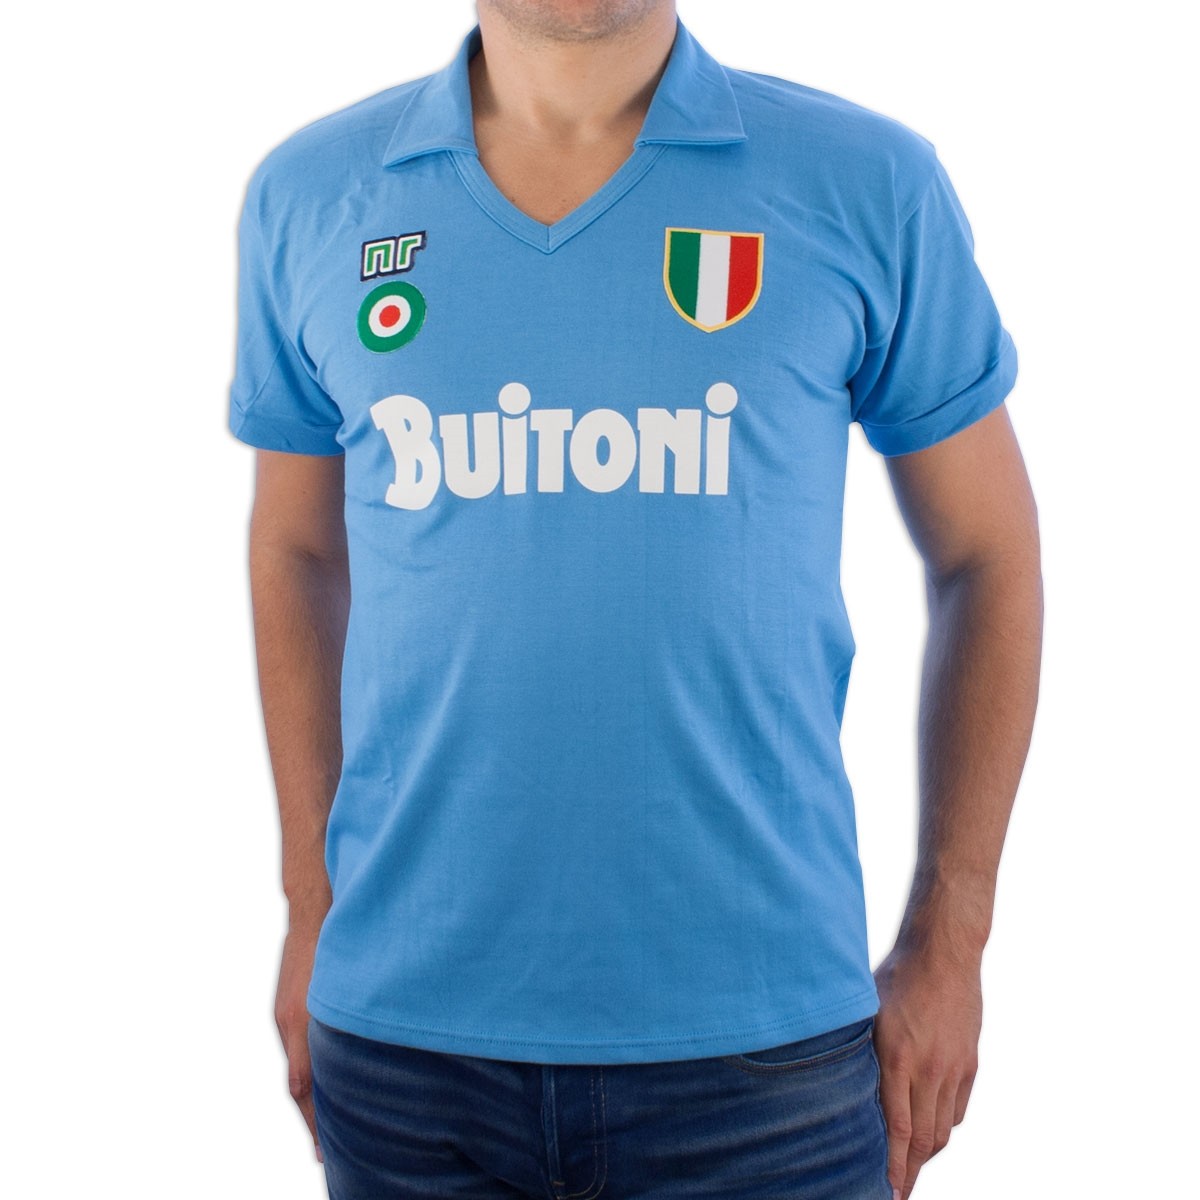 Maradona Napoli Shirt / Men's Short sleeve t shirt Diego Armando Maradona ... / 2020 popular 1 ...